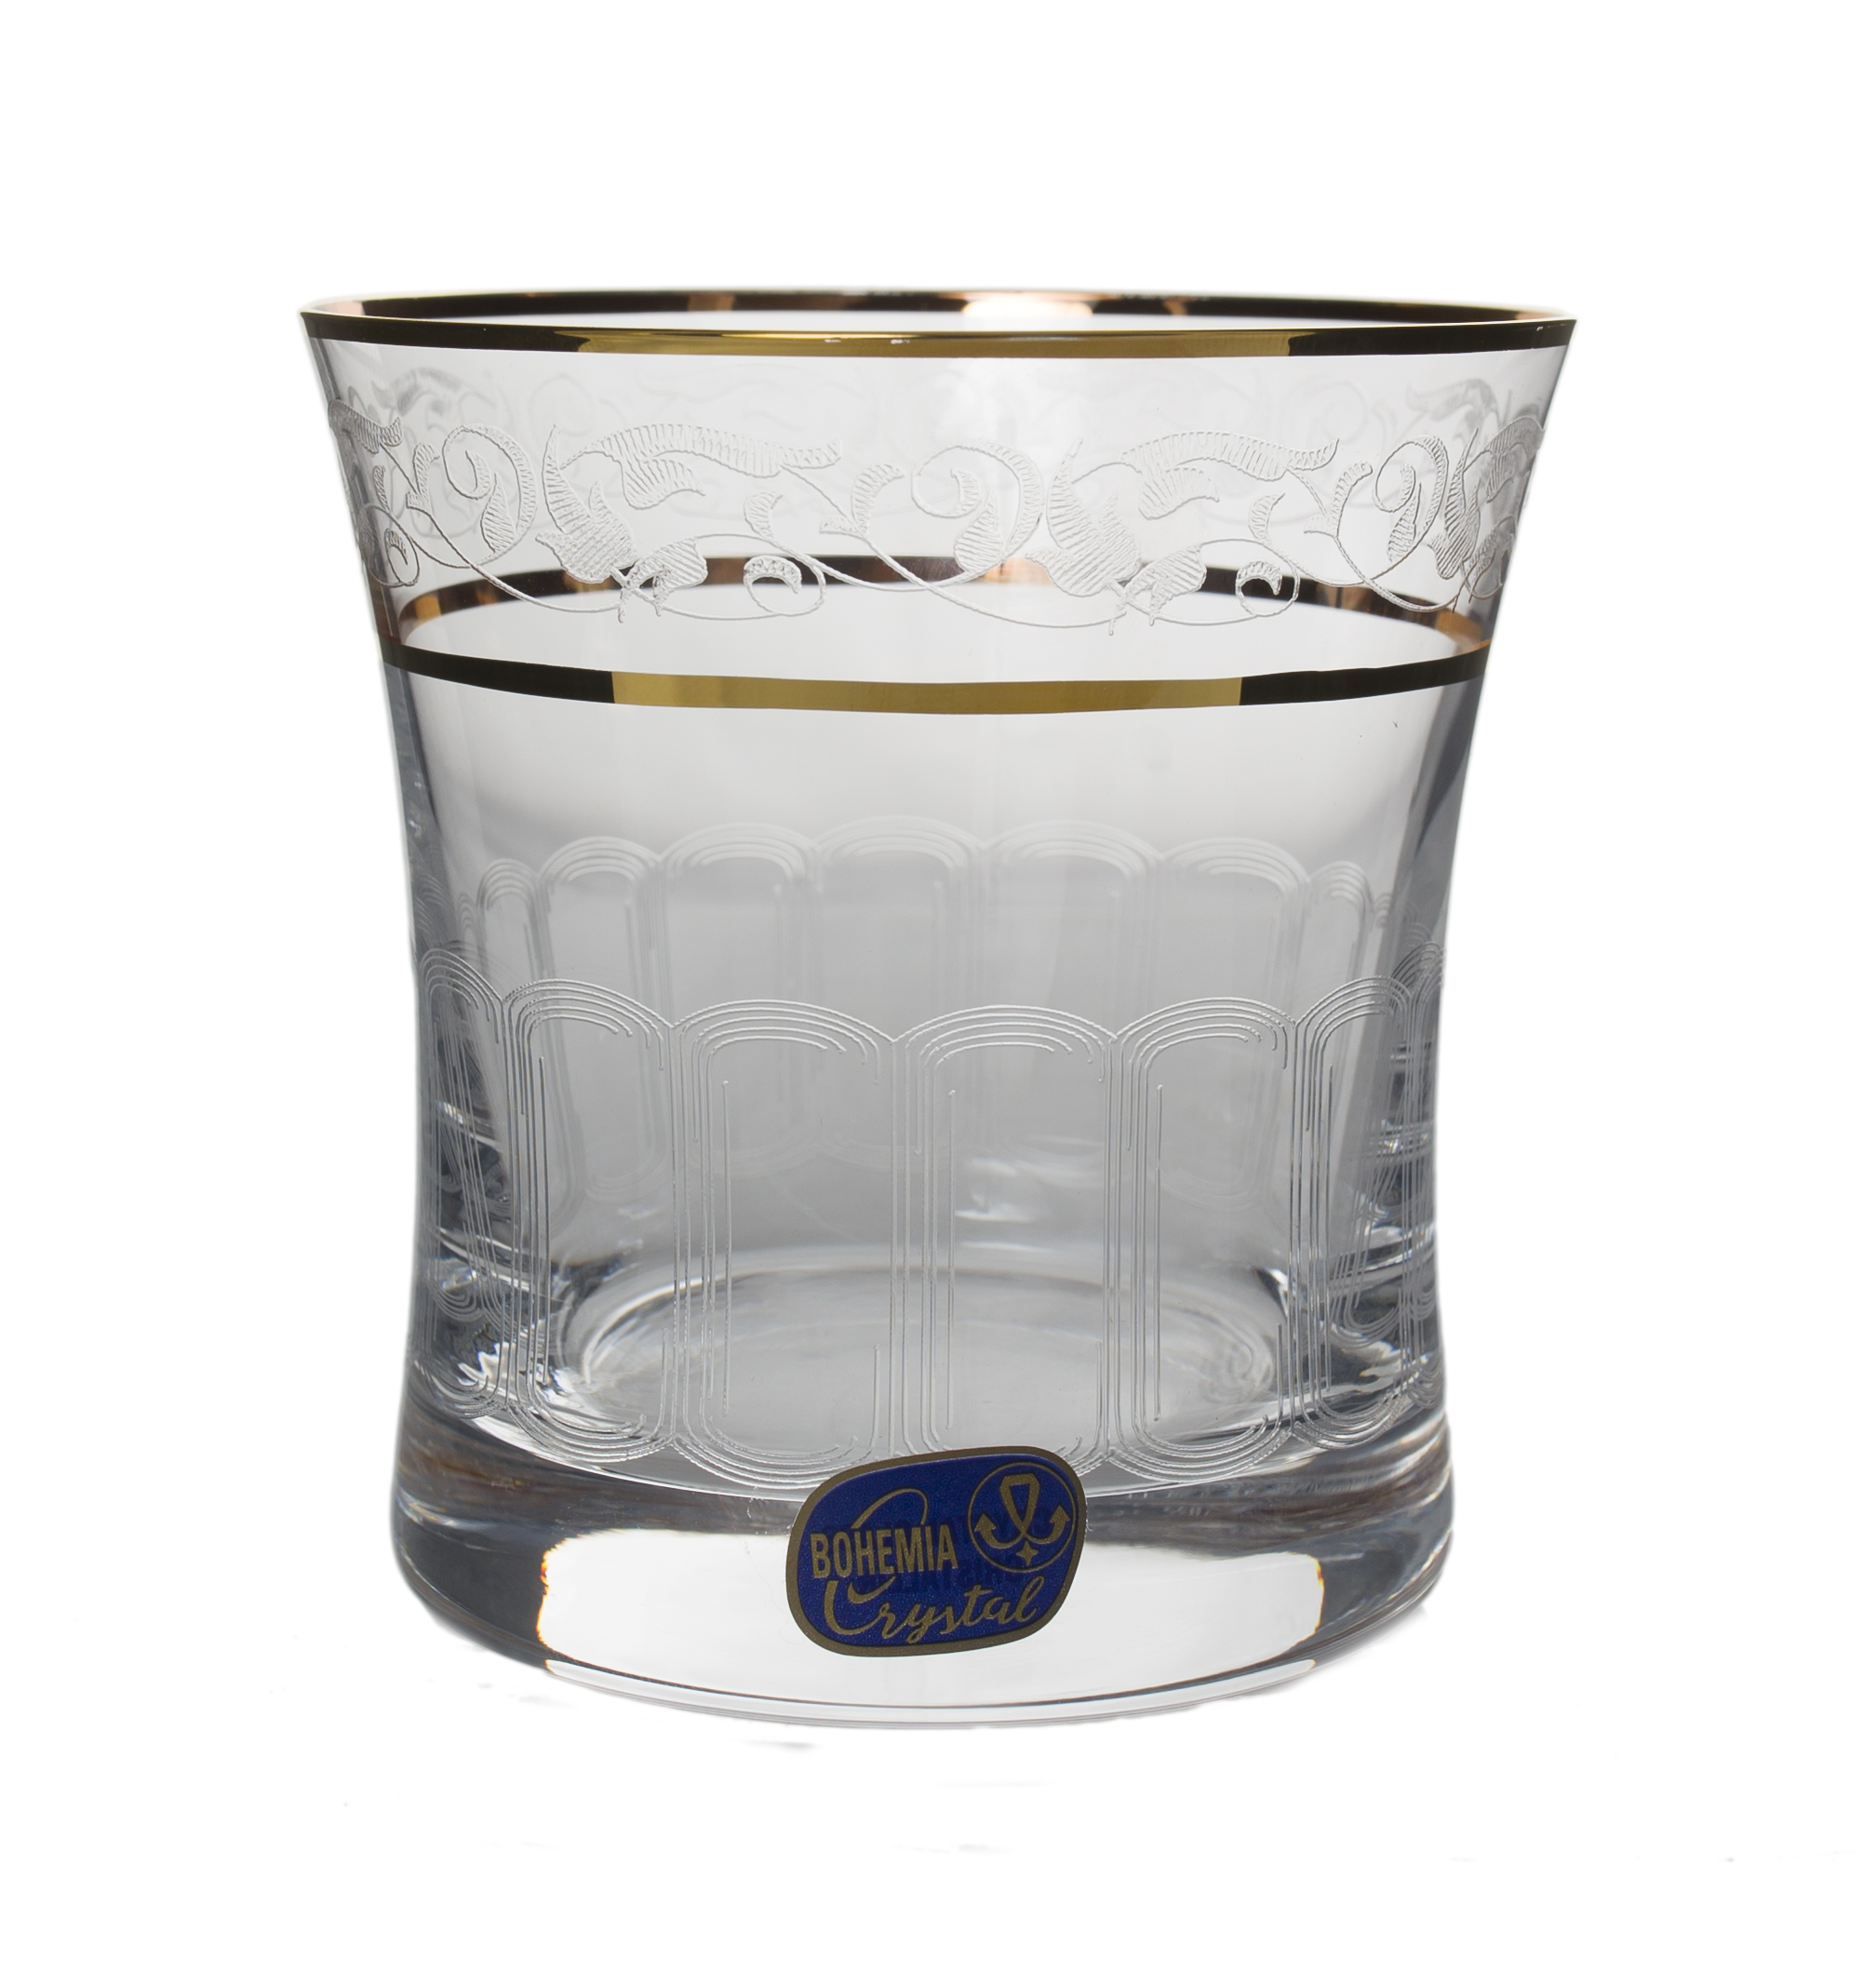 GRACE decor aur - Set 6 pahare sticla cristalina whisky 280 ml